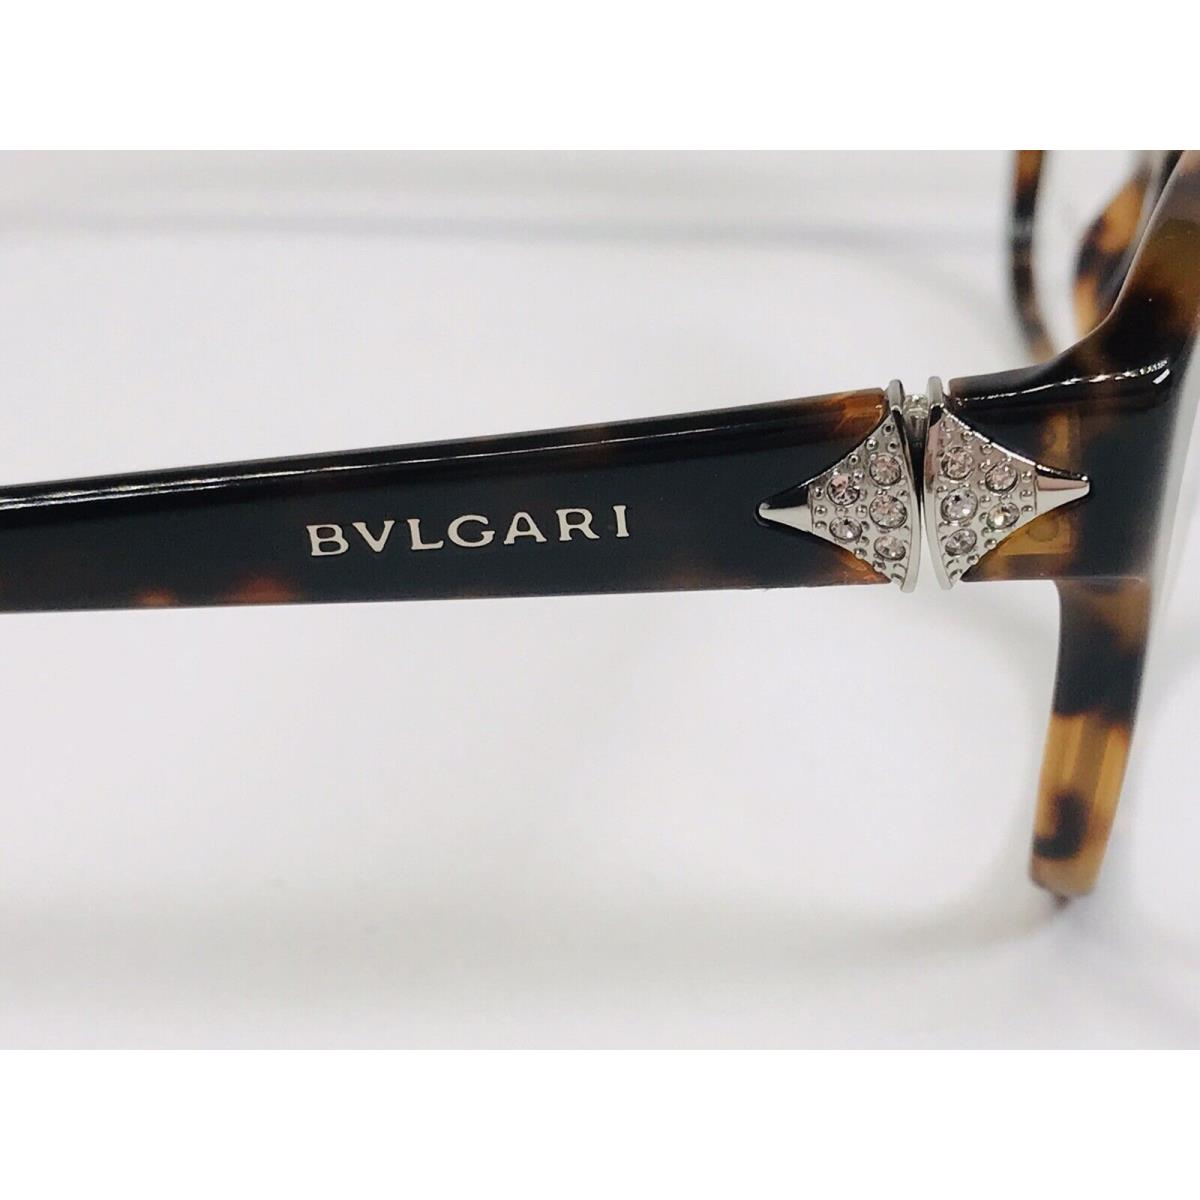 Bvlgari eyeglasses  - 5243 , Havana Frame 5